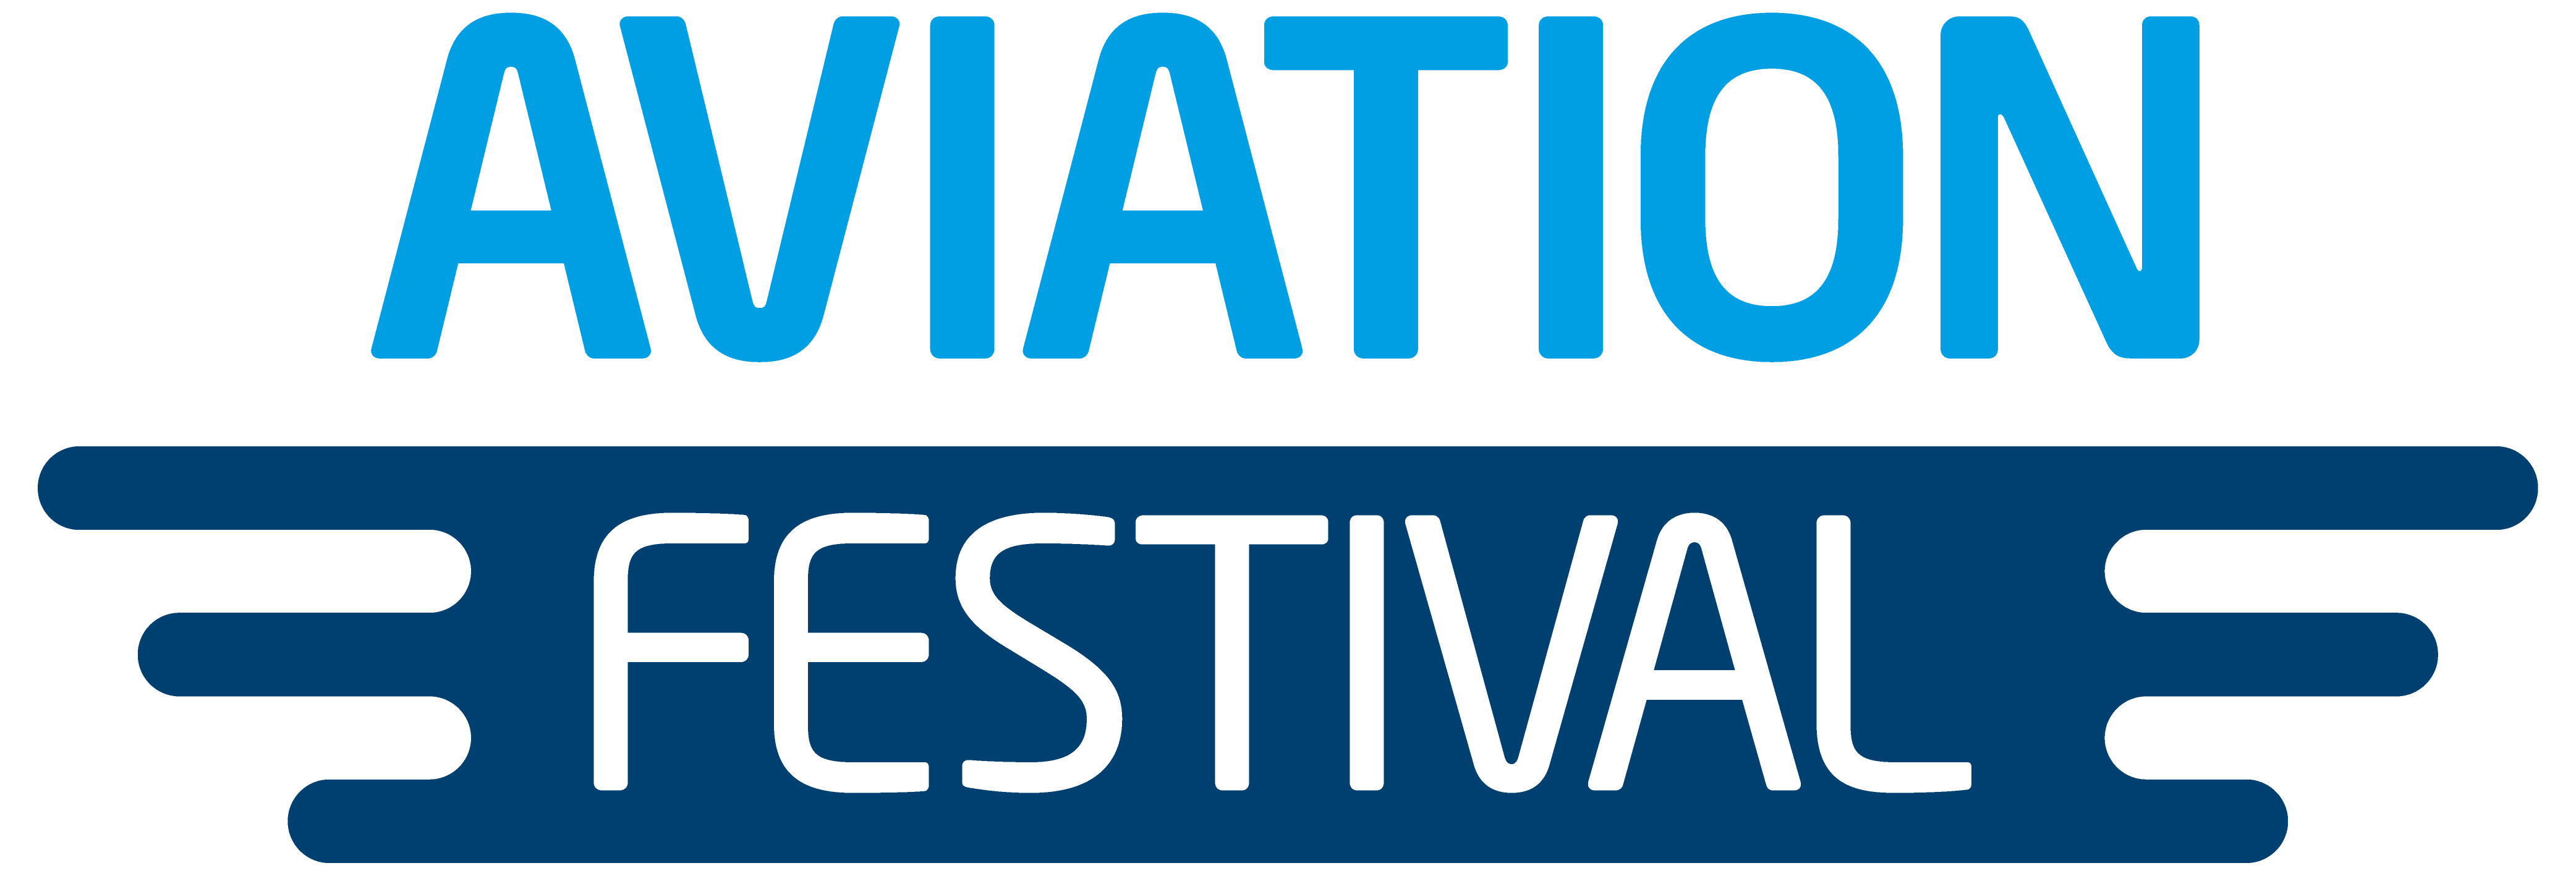 Aviation Festival